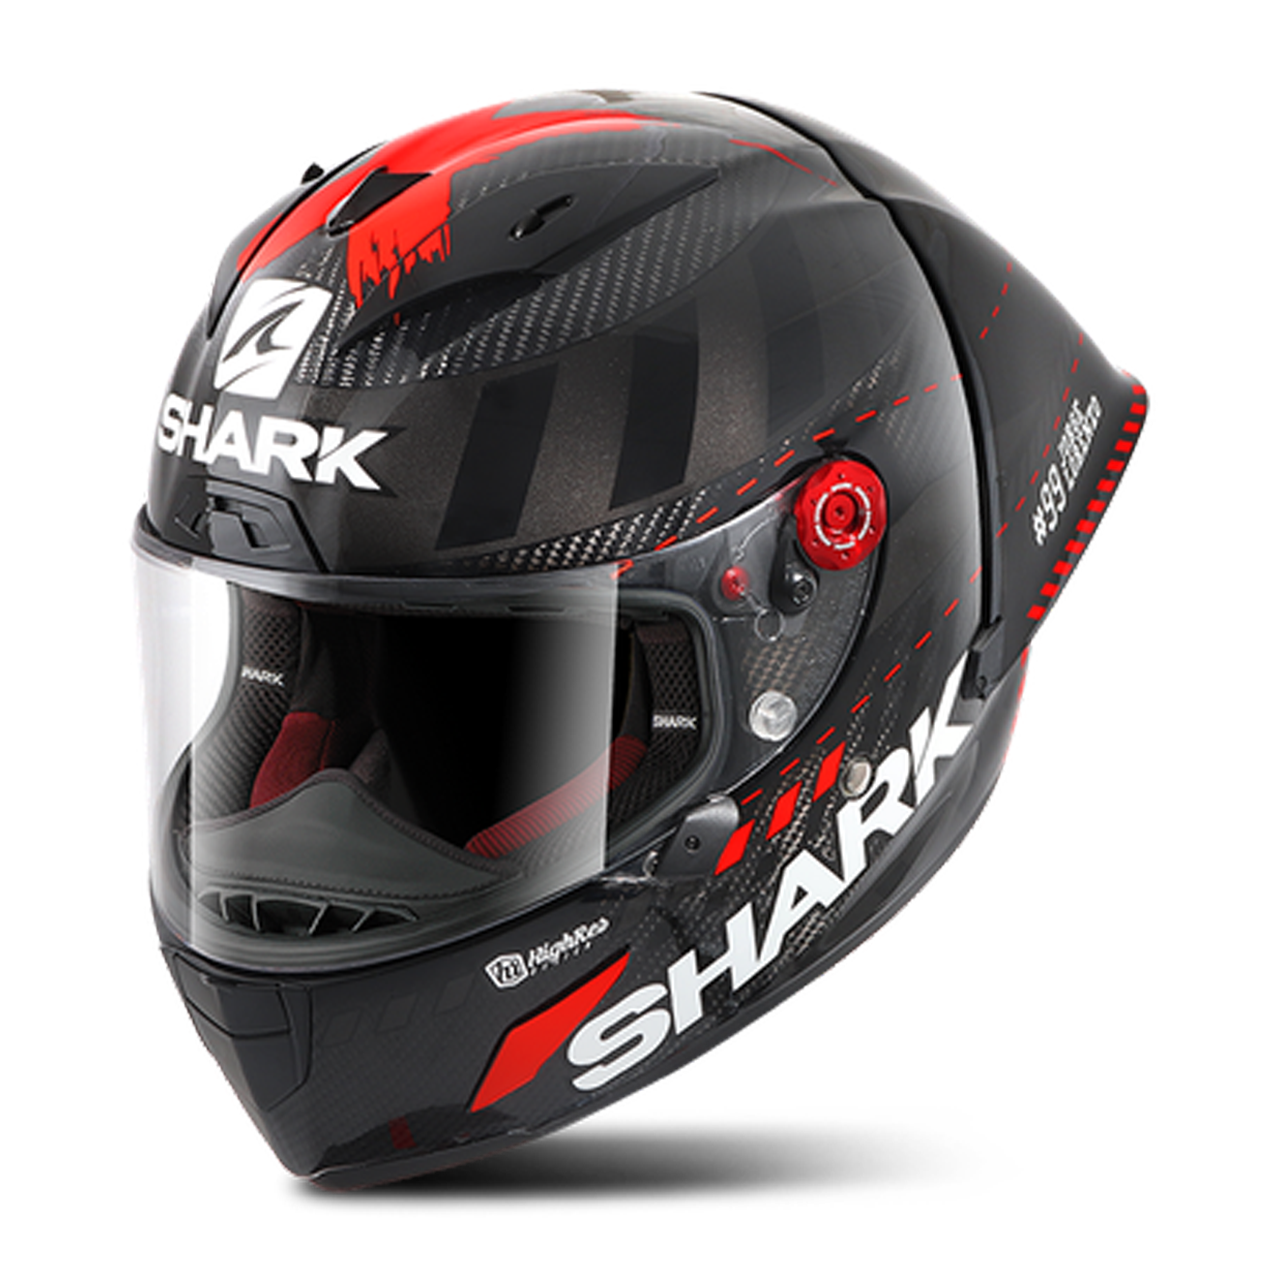 Shark Casco Integral  Race-R Pro GP Lorenzo Winter Test 99 Carbono-Antracita-Rojo